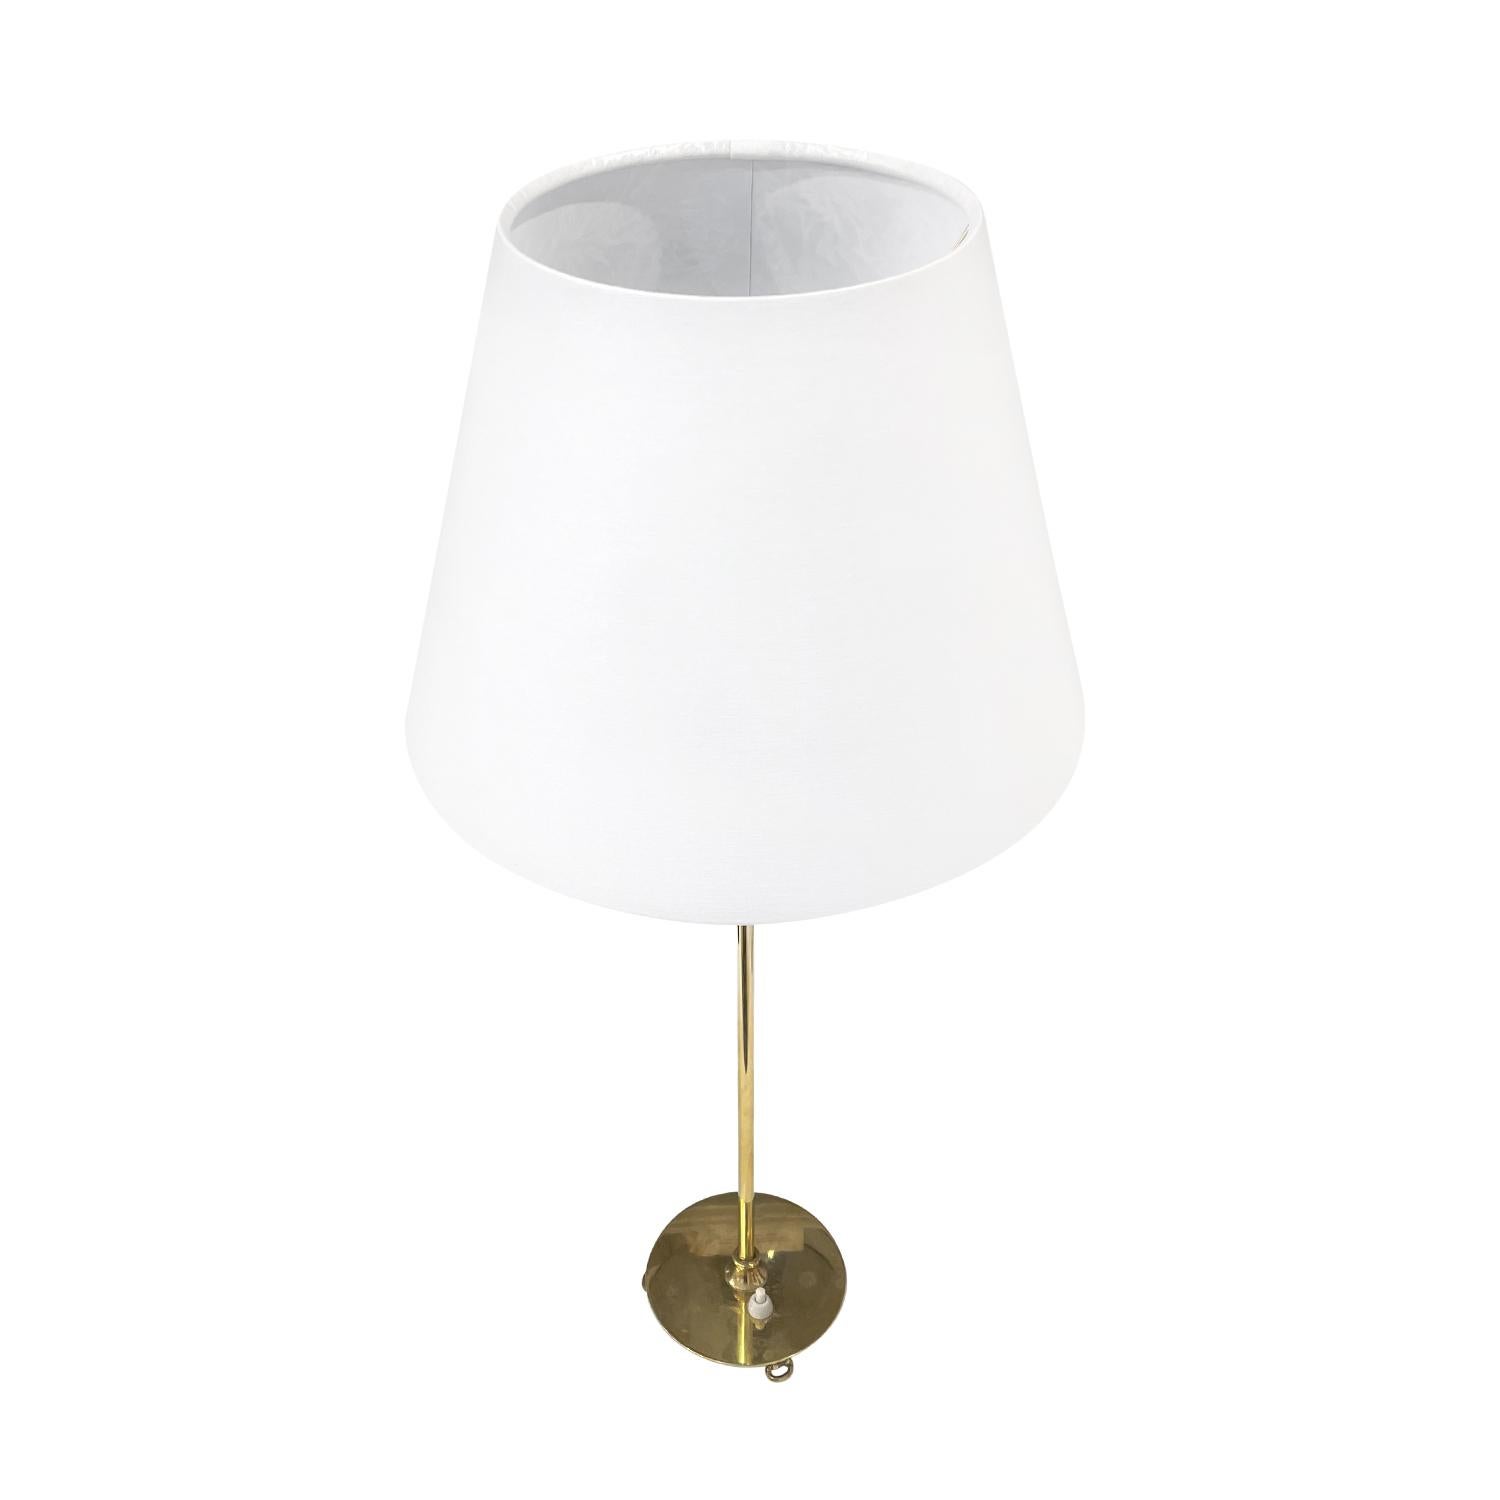 Mid-Century Modern 20th Century Swedish Svenskt Tenn Brass Dressing Table Lamp by Josef Frank For Sale